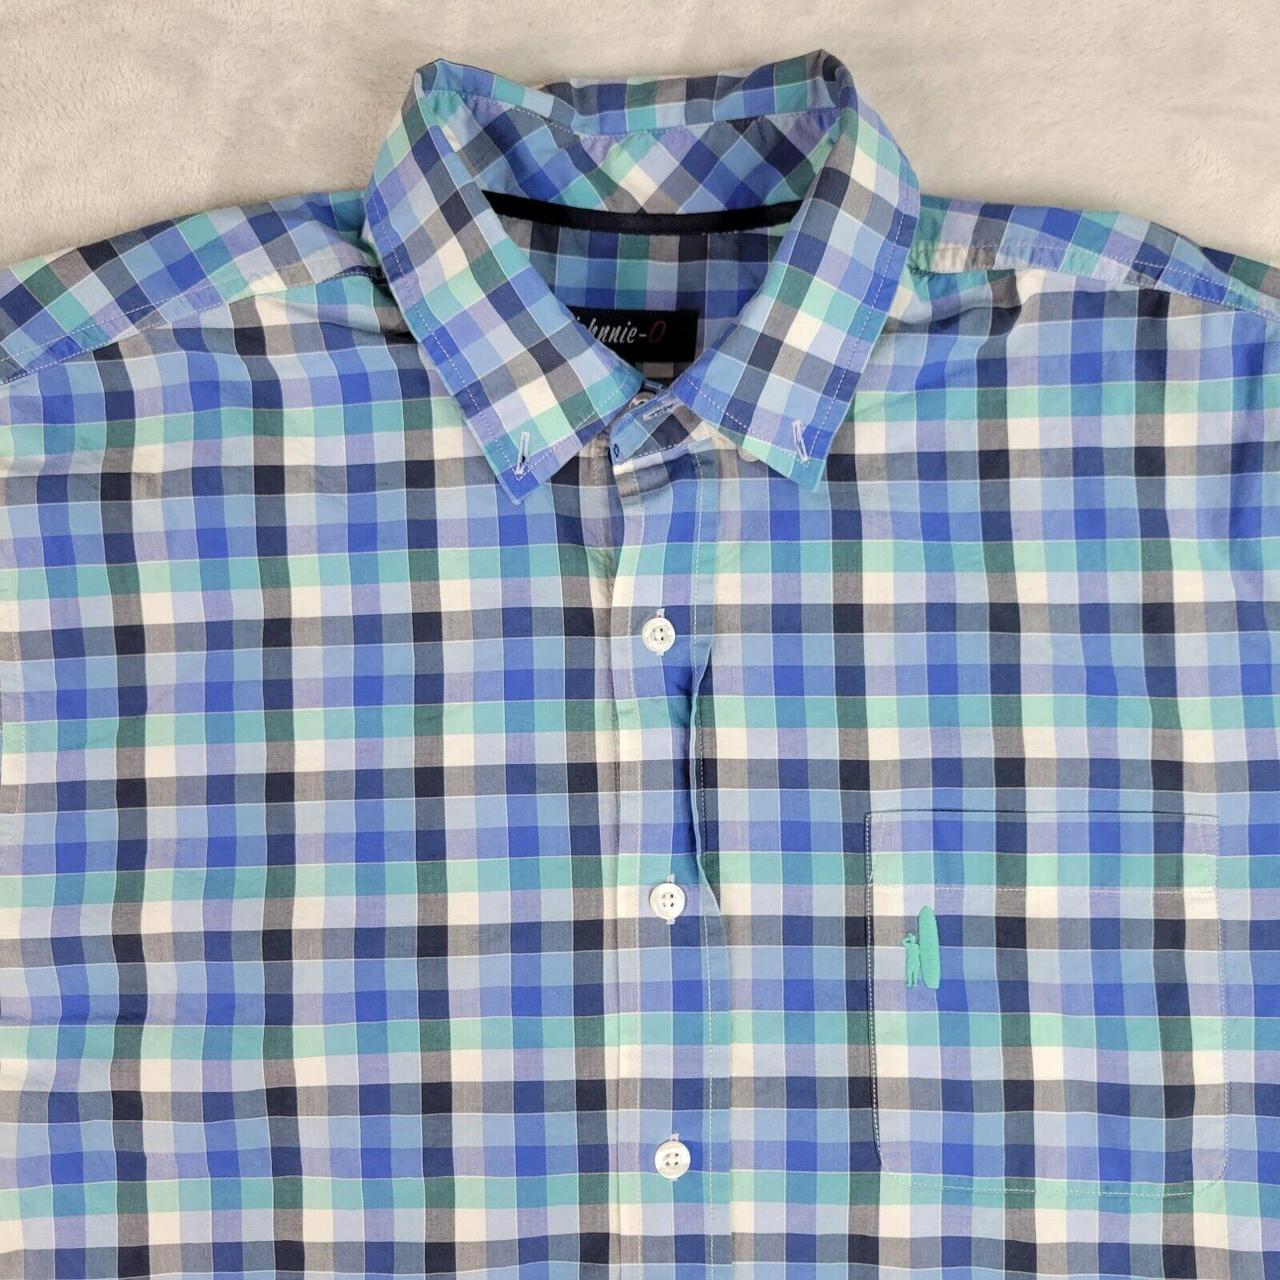 Product Image 2 - Johnnie-O Mens Shirt Large Blue